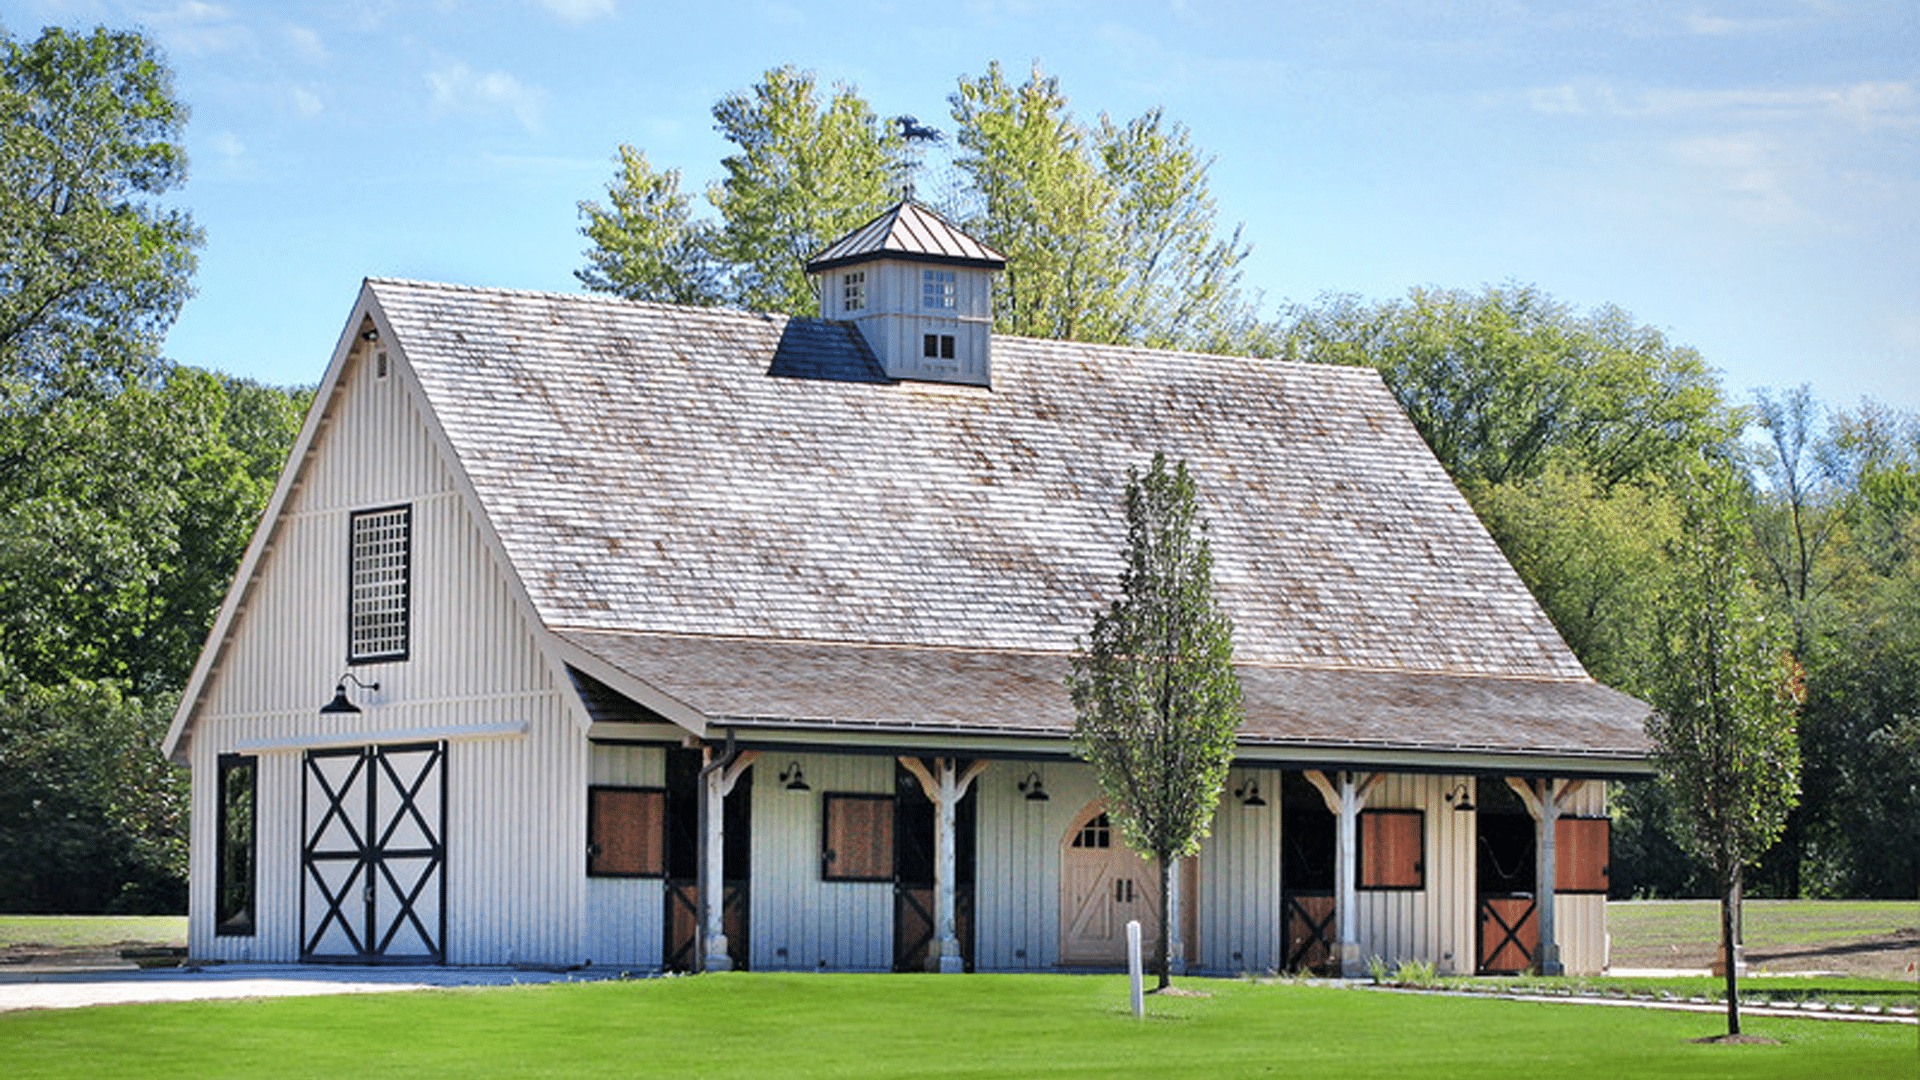 A Metal Barn Converted into a house - Outdoor Option - Eatonton Georgia